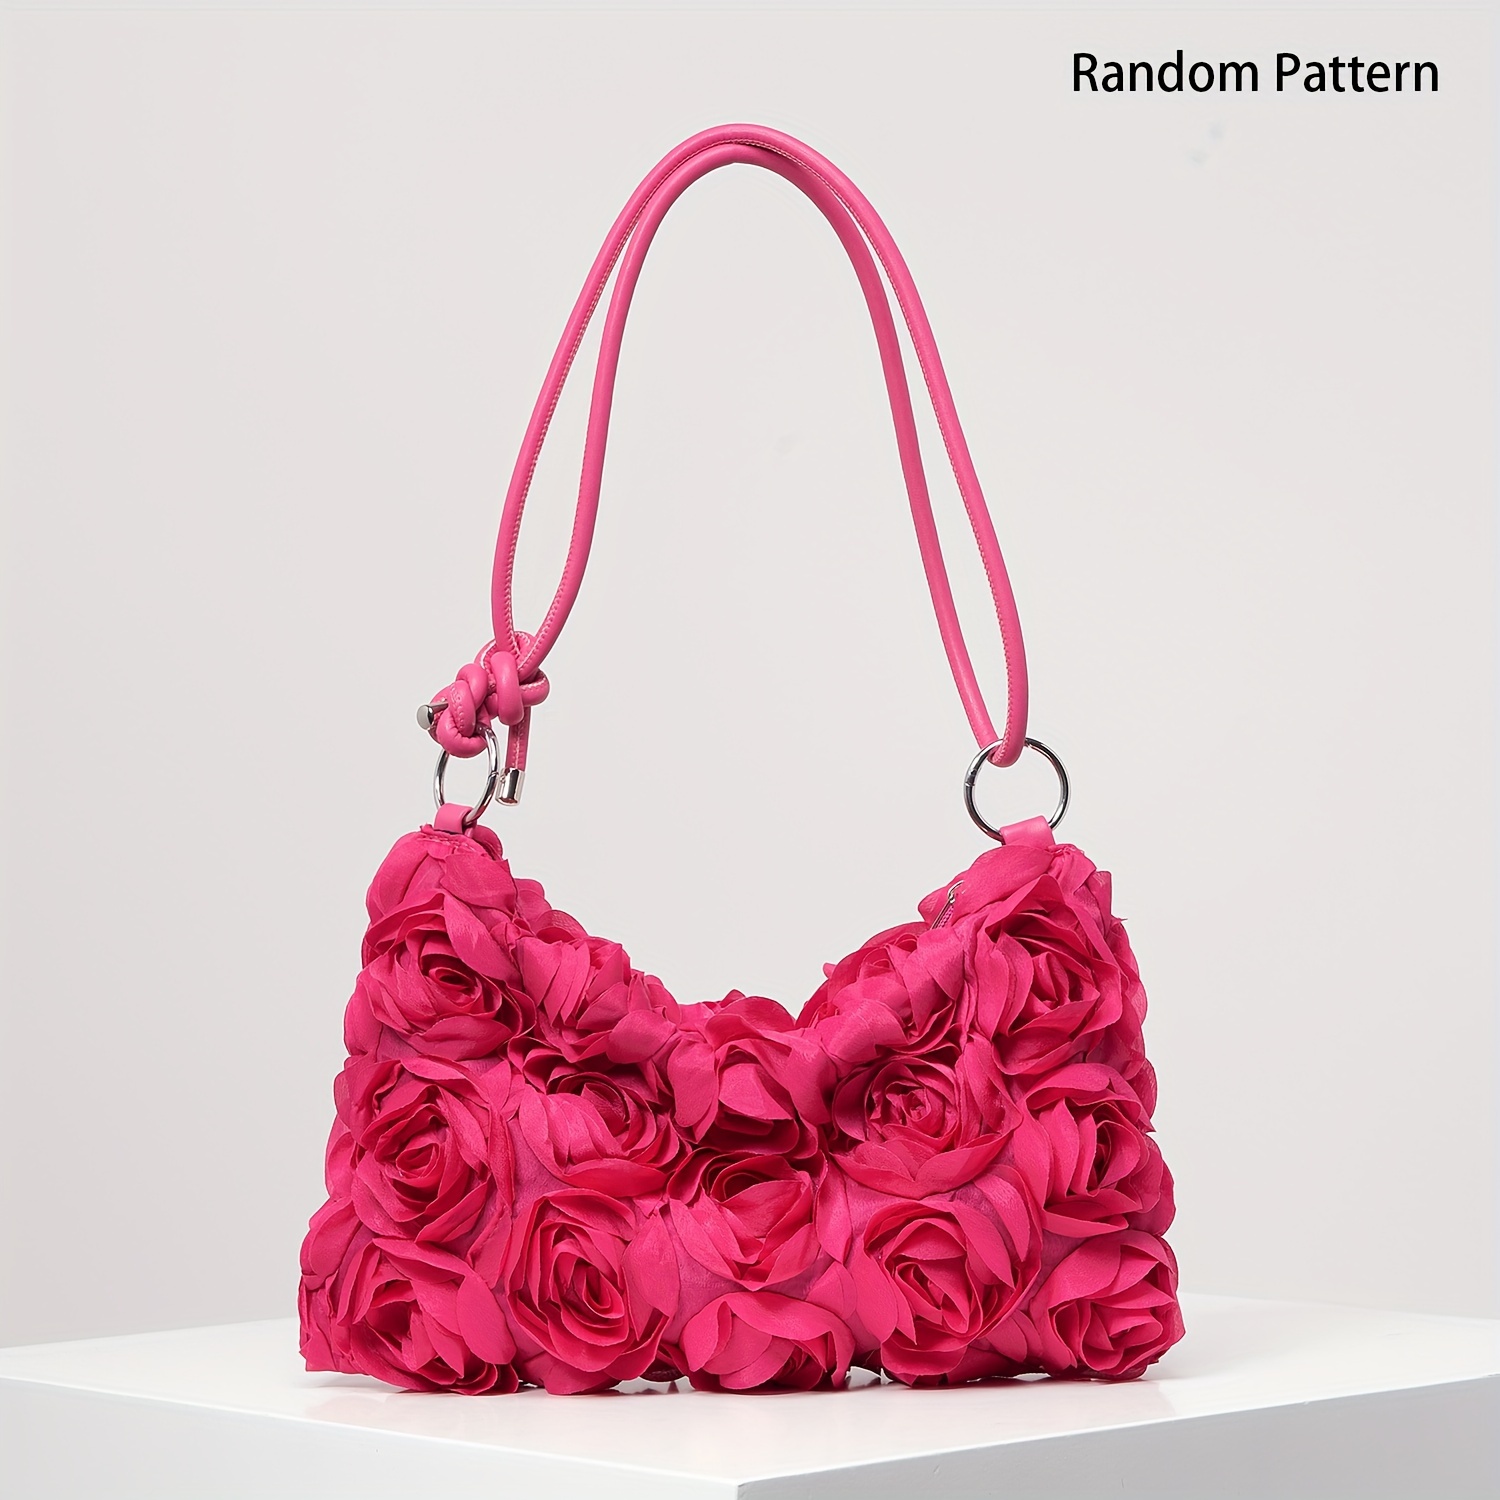 

Elegant Rose Flower Bag, Wedding Party Evening Satchel Bag, Underarm Handbag, Sweet Lady's Purse, Valentine's Gift For Women